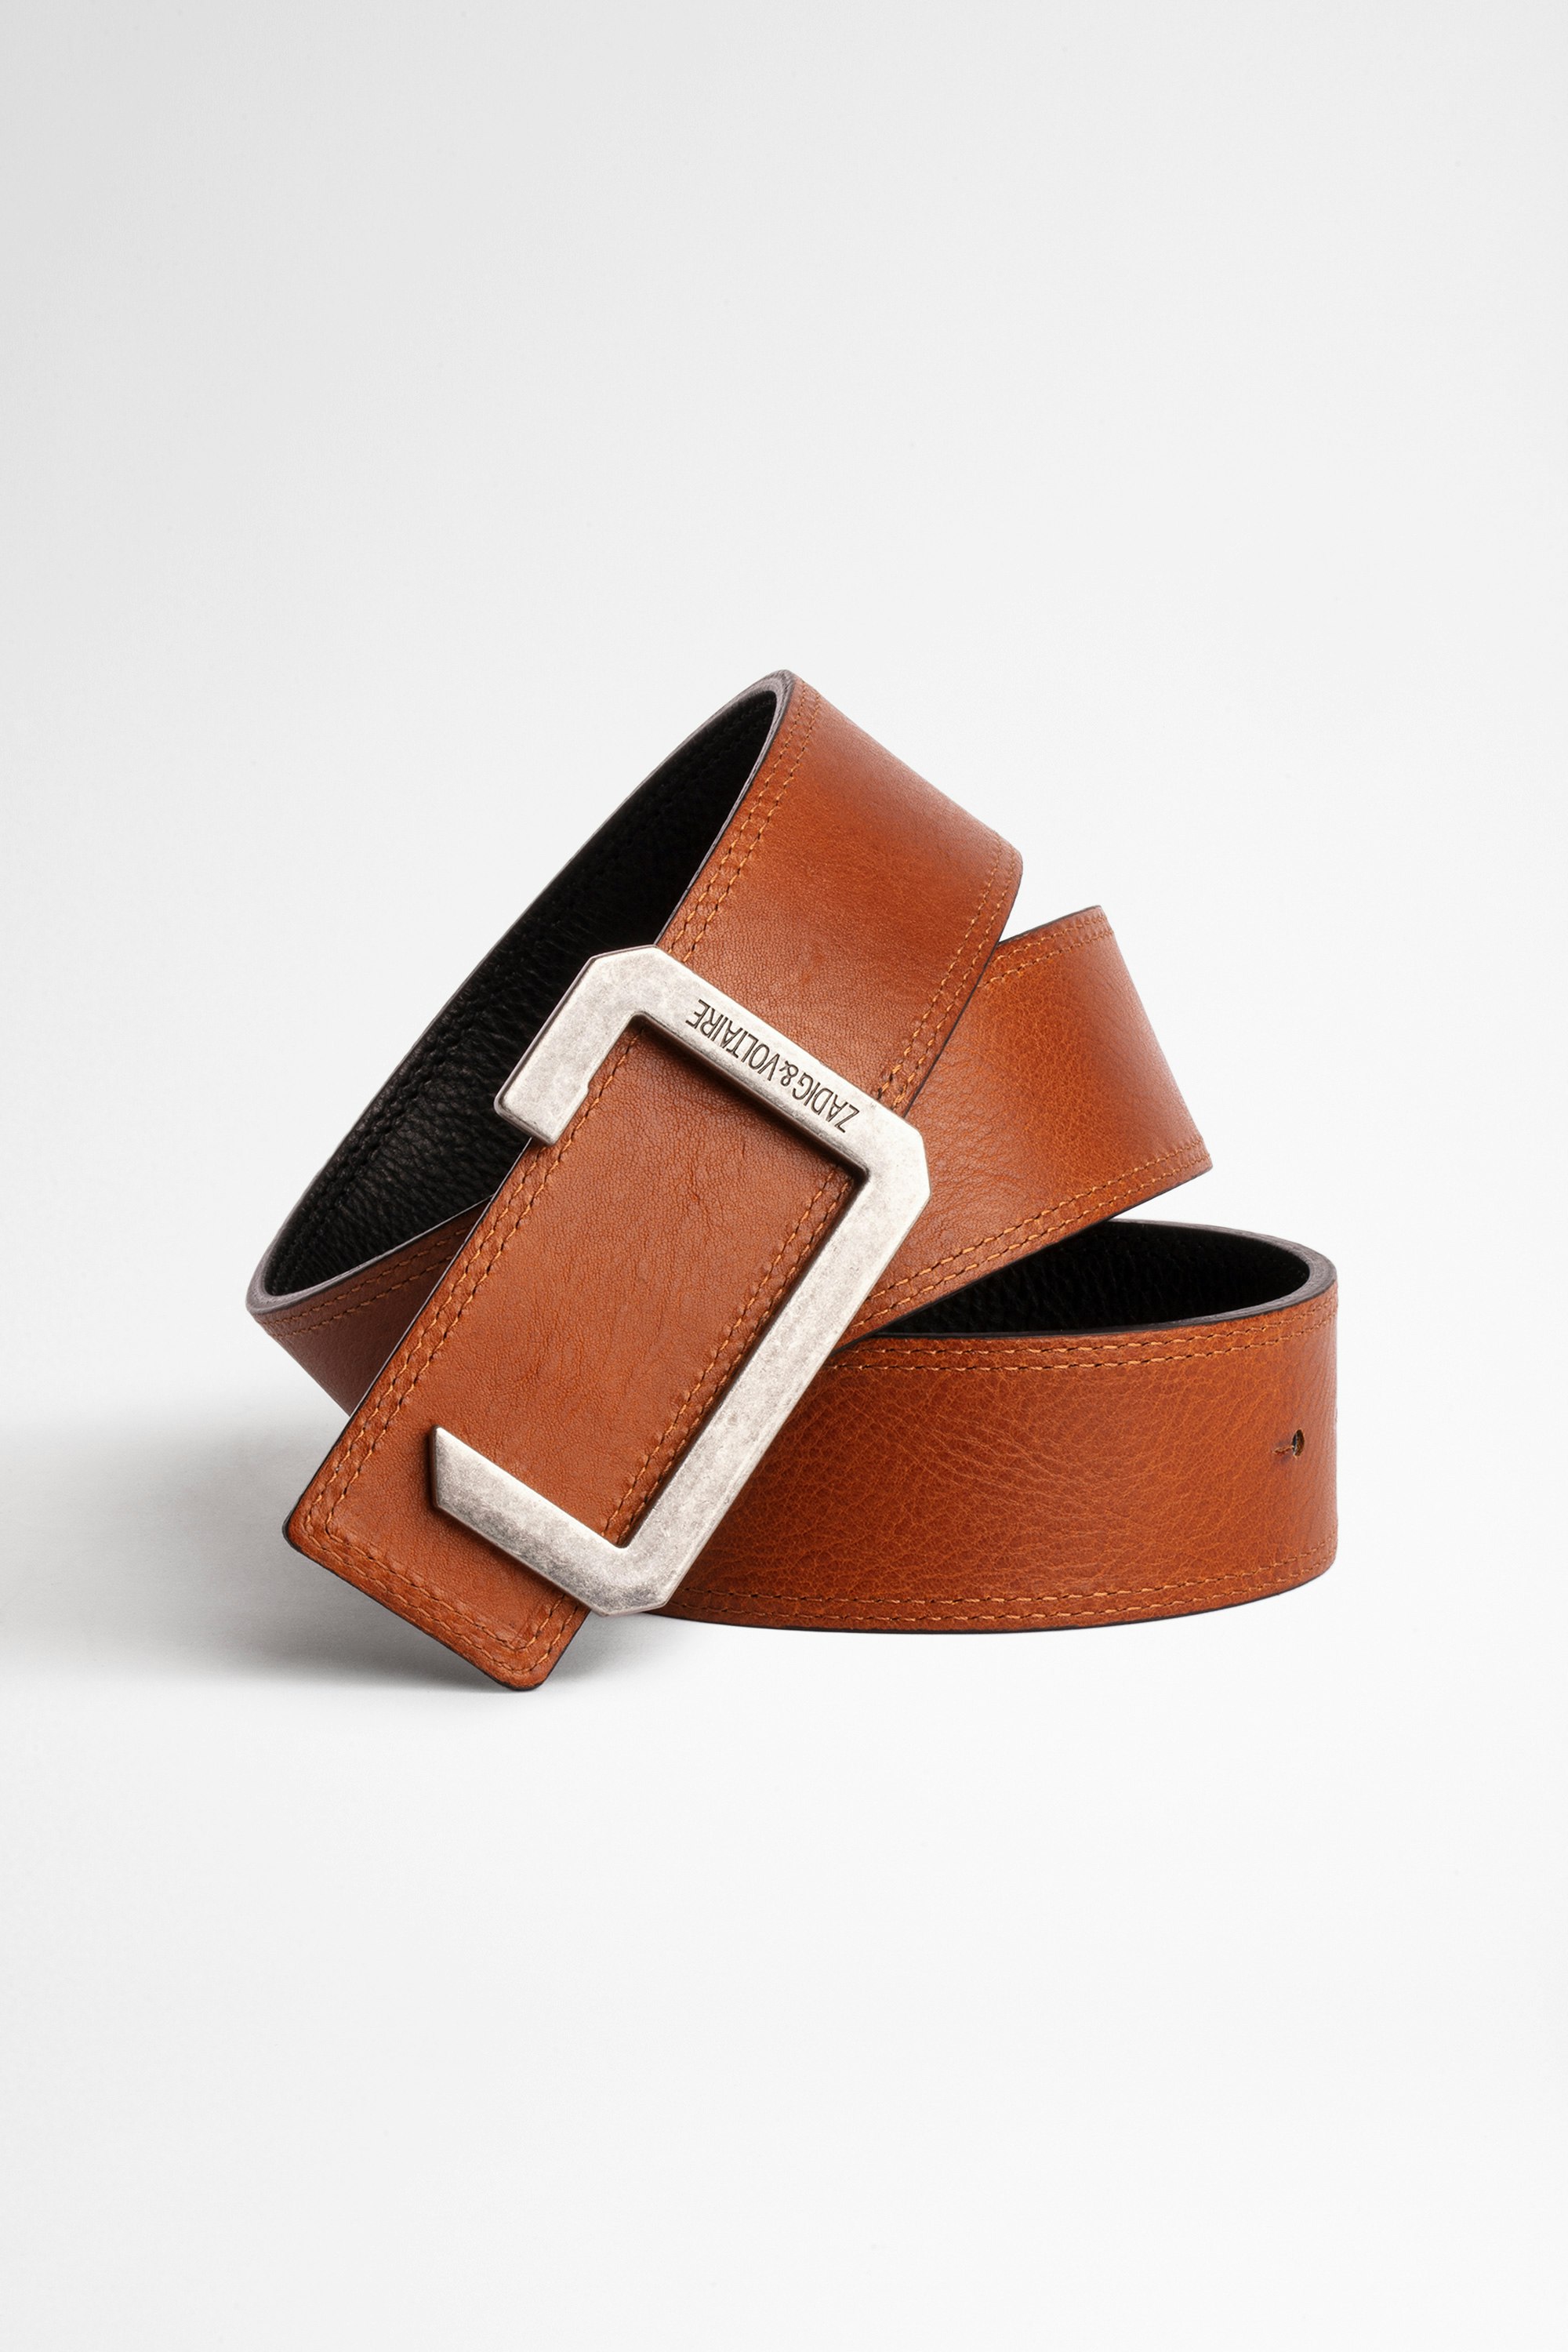 The Reversible Belt Leather Men's reversible cognac leather belt